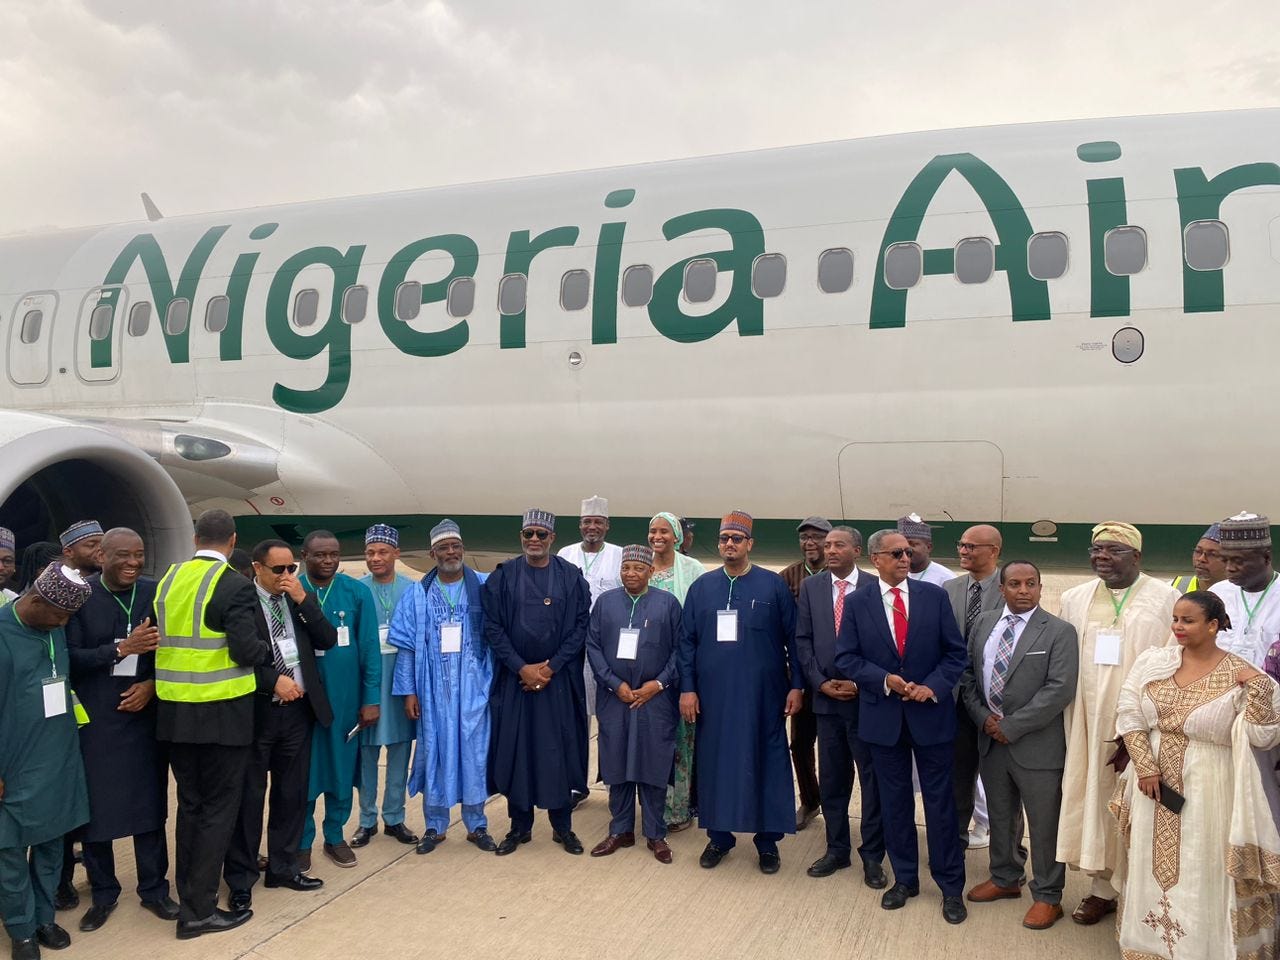 UPDATED: Reps alleges fraud in unveiling of Nigeria Air, demands  prosecution | Premium Times Nigeria